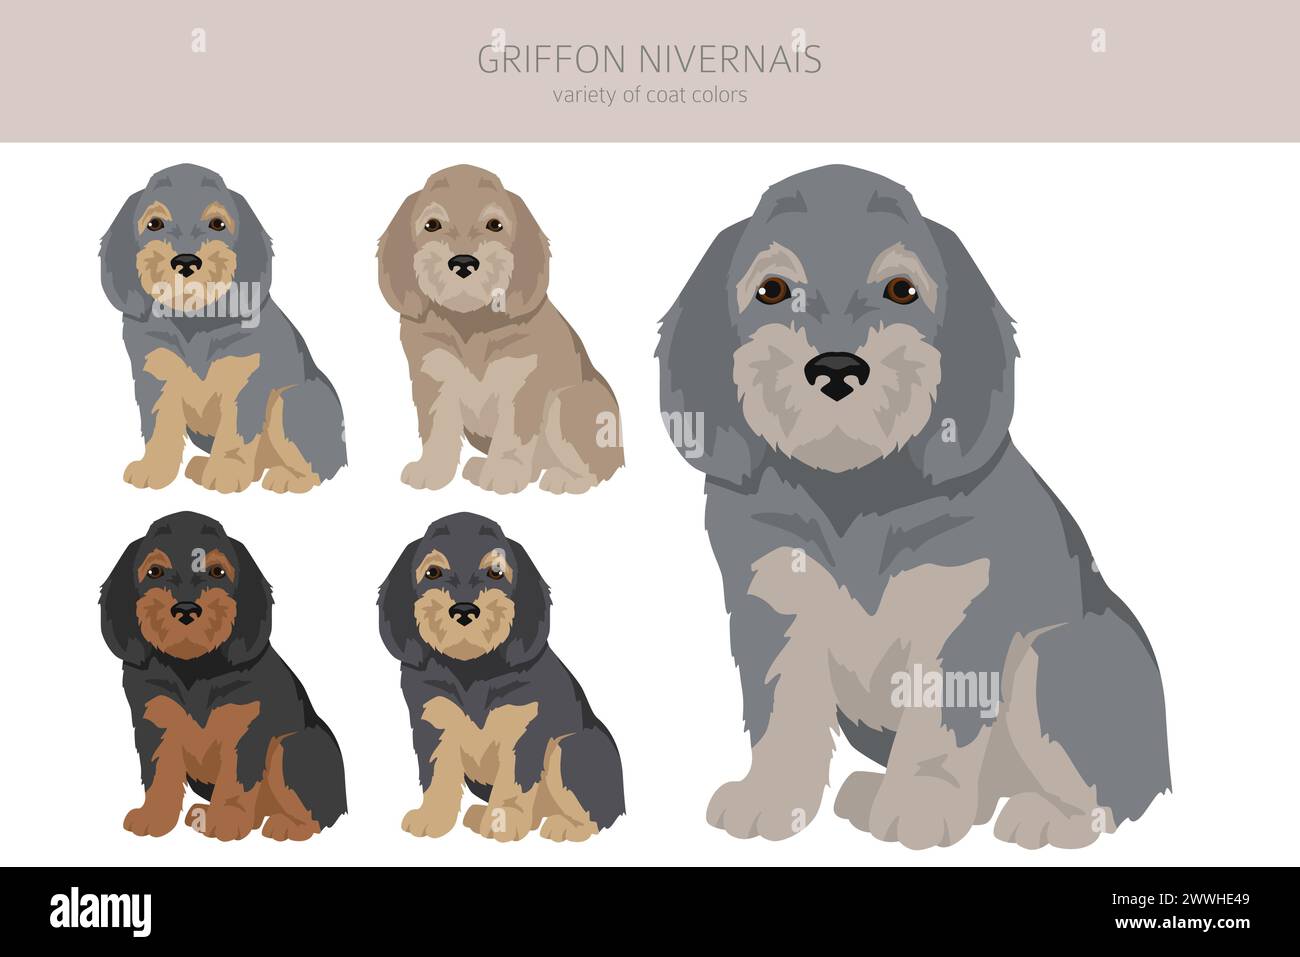 Griffon Nivernais puppy clipart. Different coat colors set.  Vector illustration Stock Vector